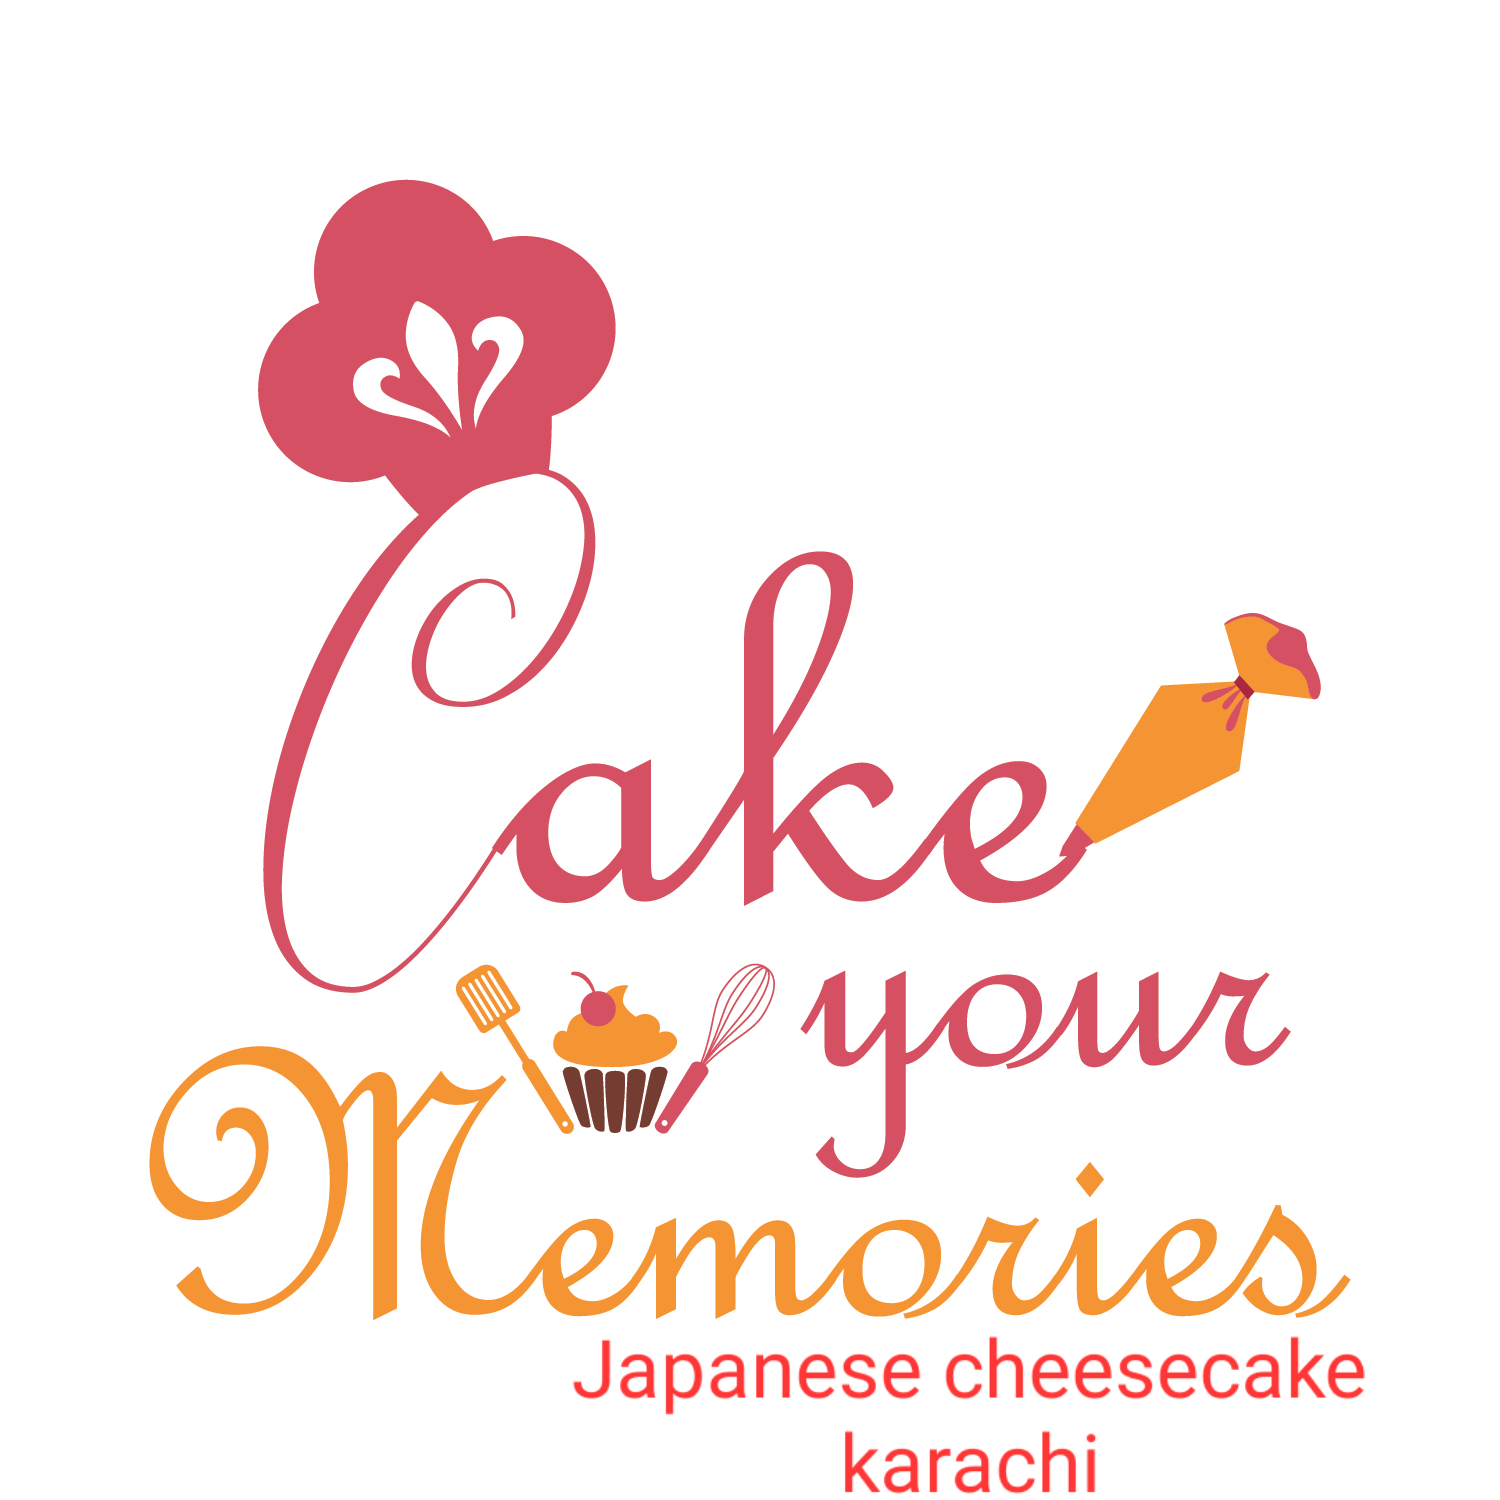 Cake your memories